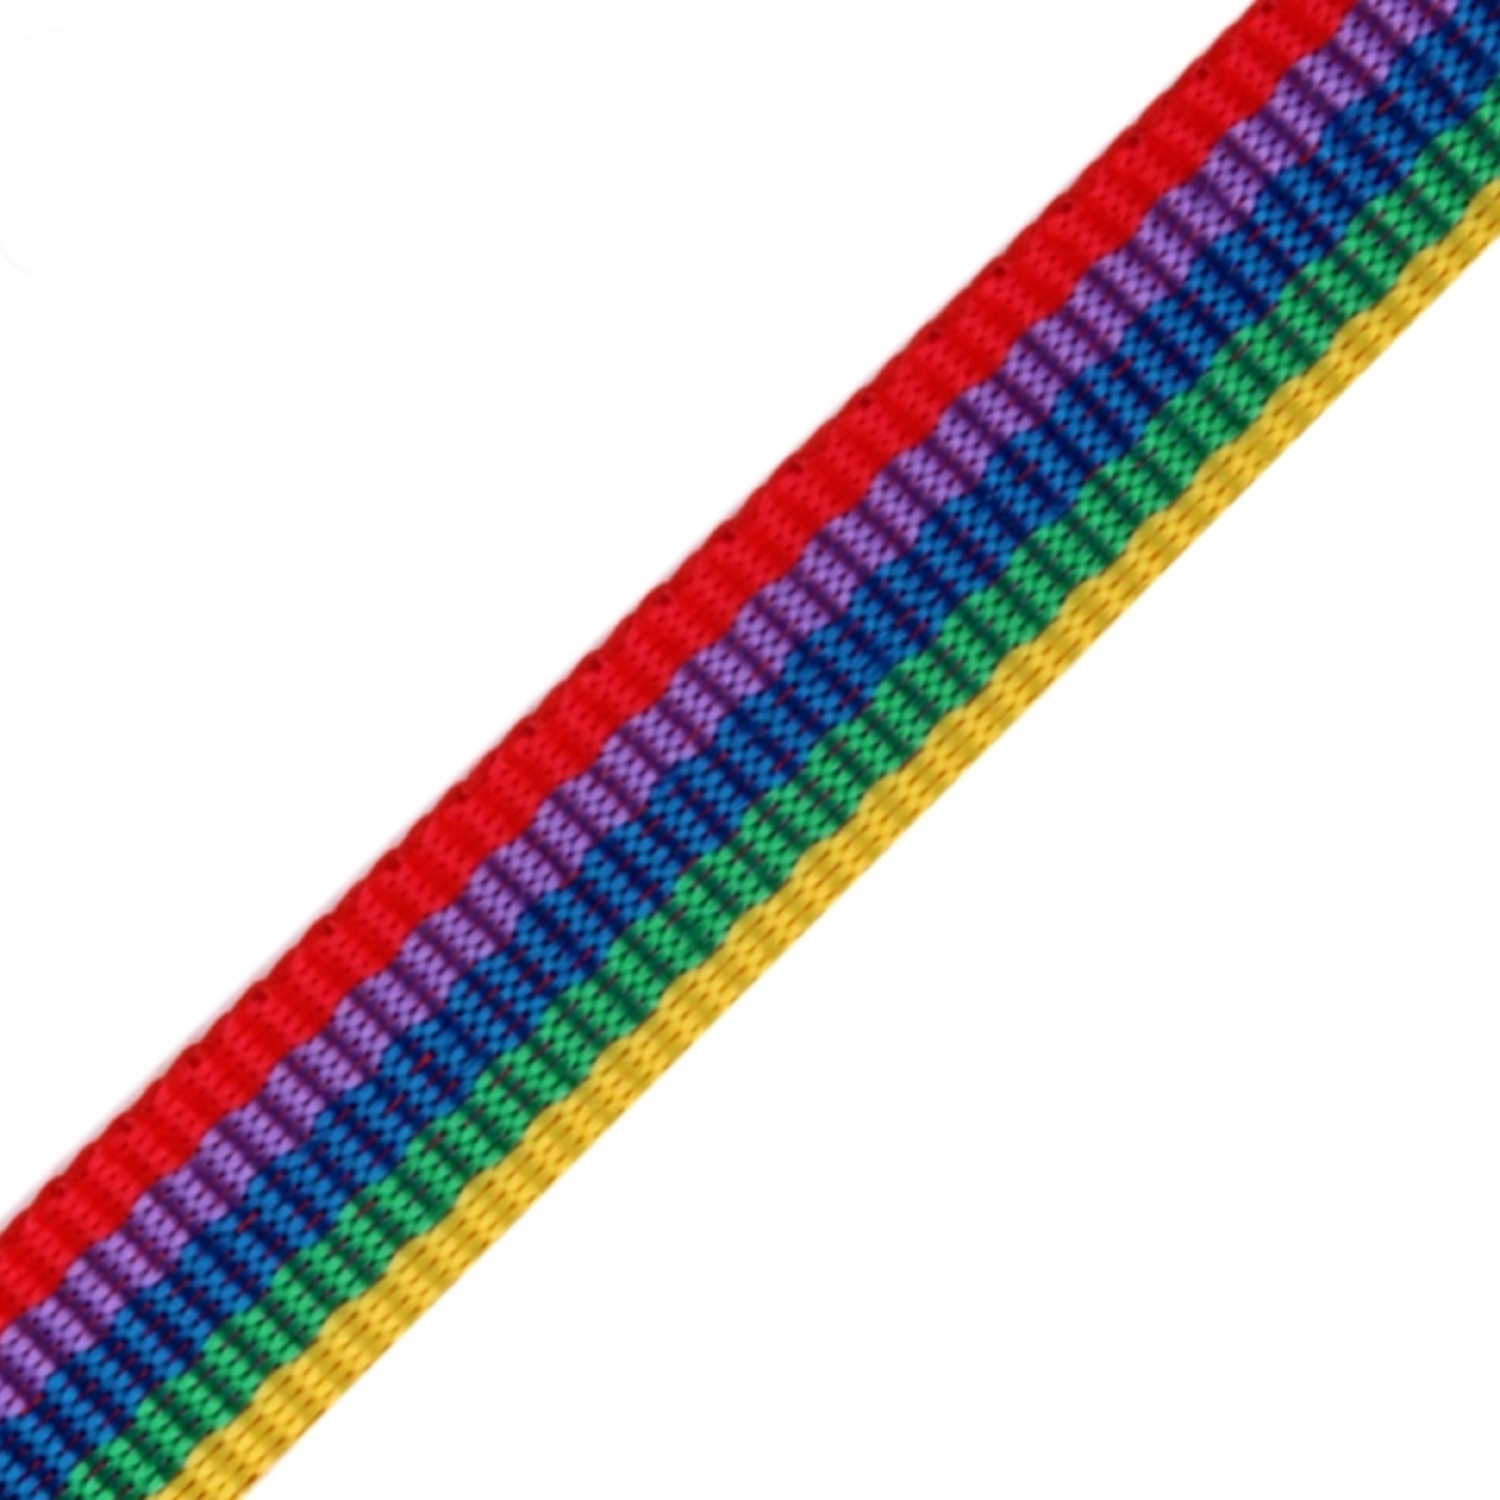 Gurtband - 15mm - Multicolored (90)